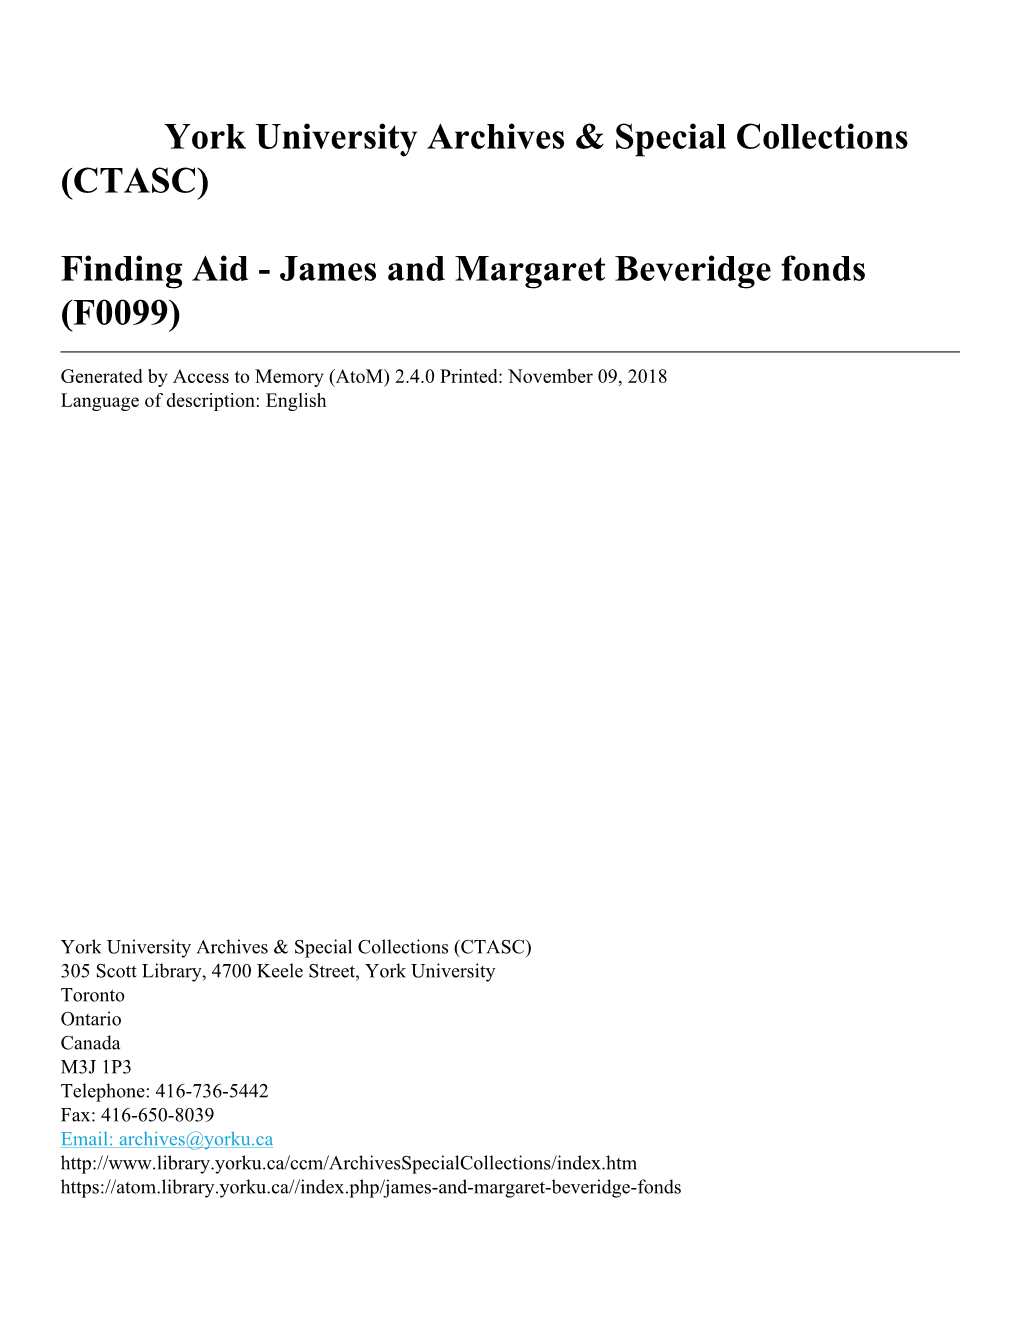 James and Margaret Beveridge Fonds (F0099)